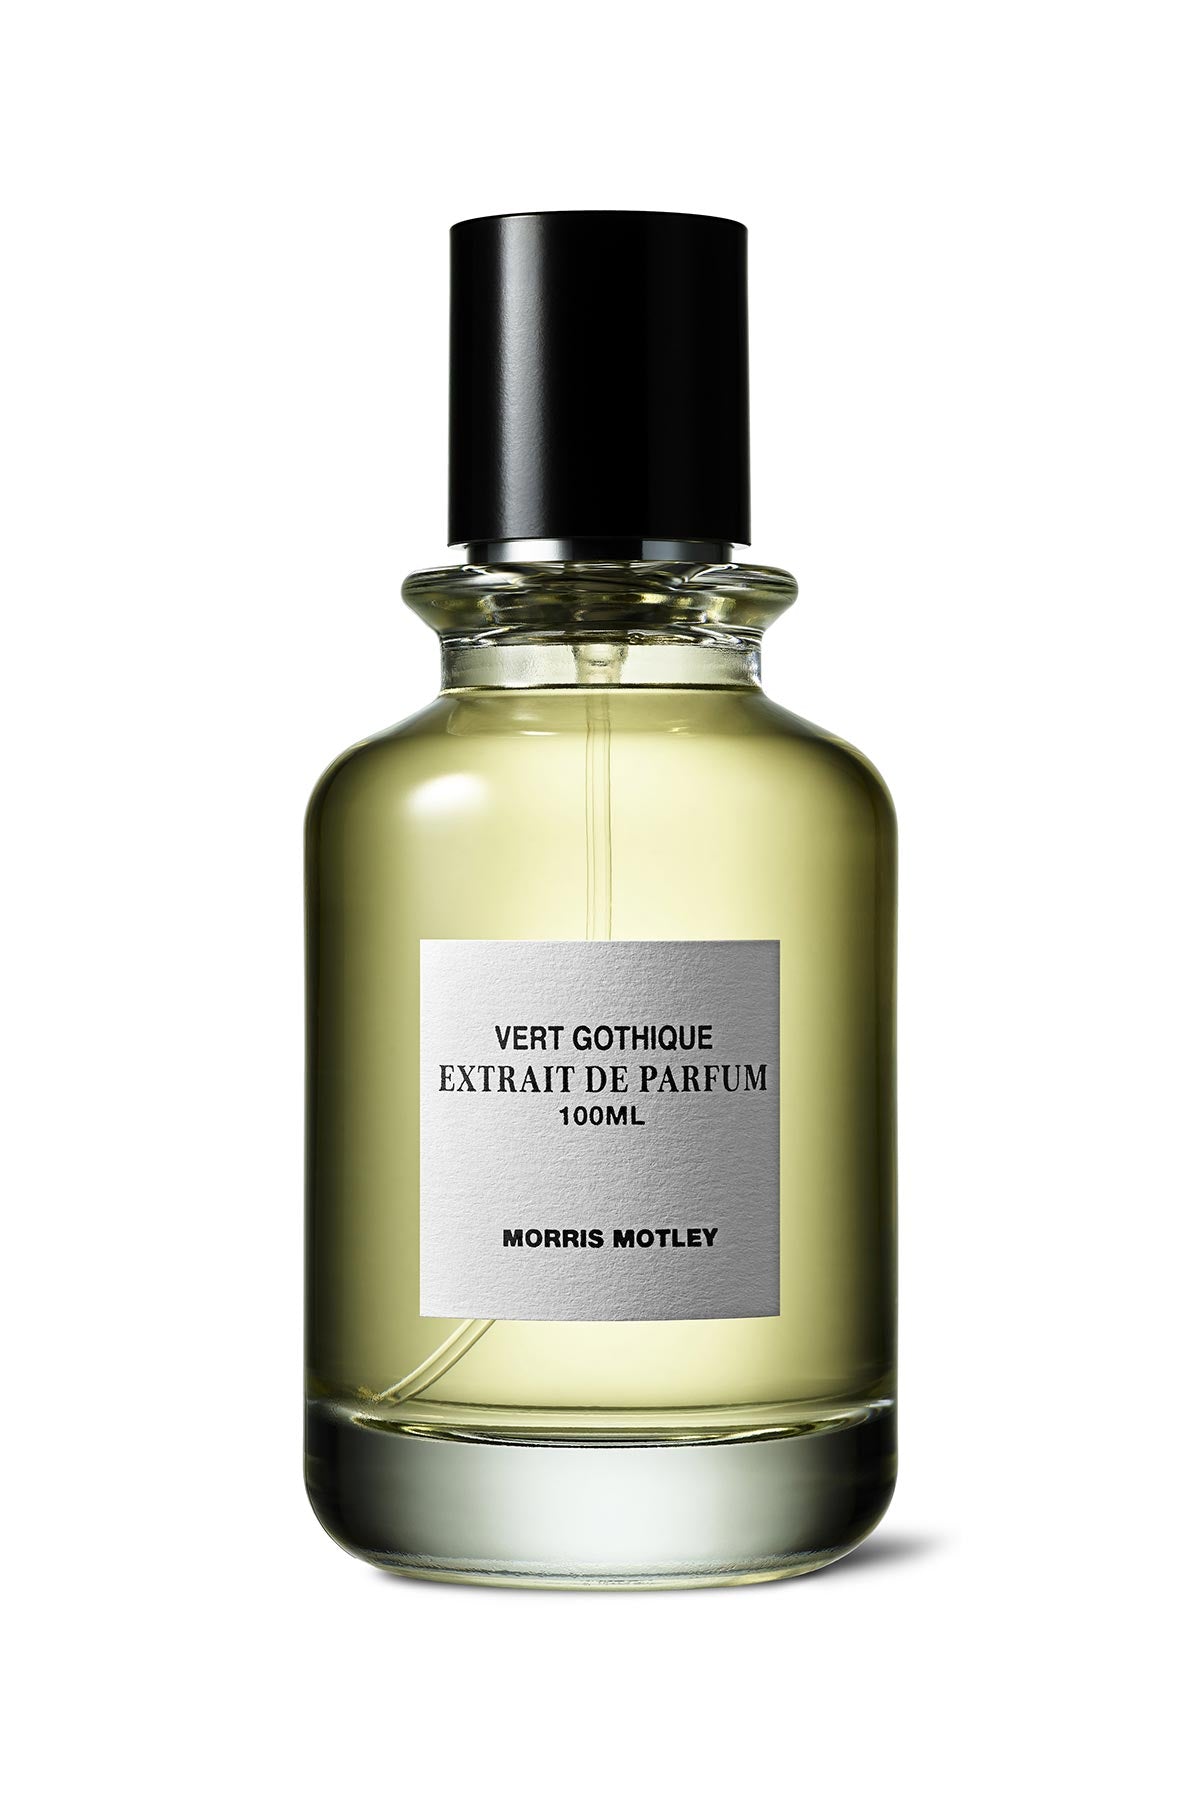 Buy Morris Motley Vert Gothique Extrait de Parfum 100ml | Perfumes ...